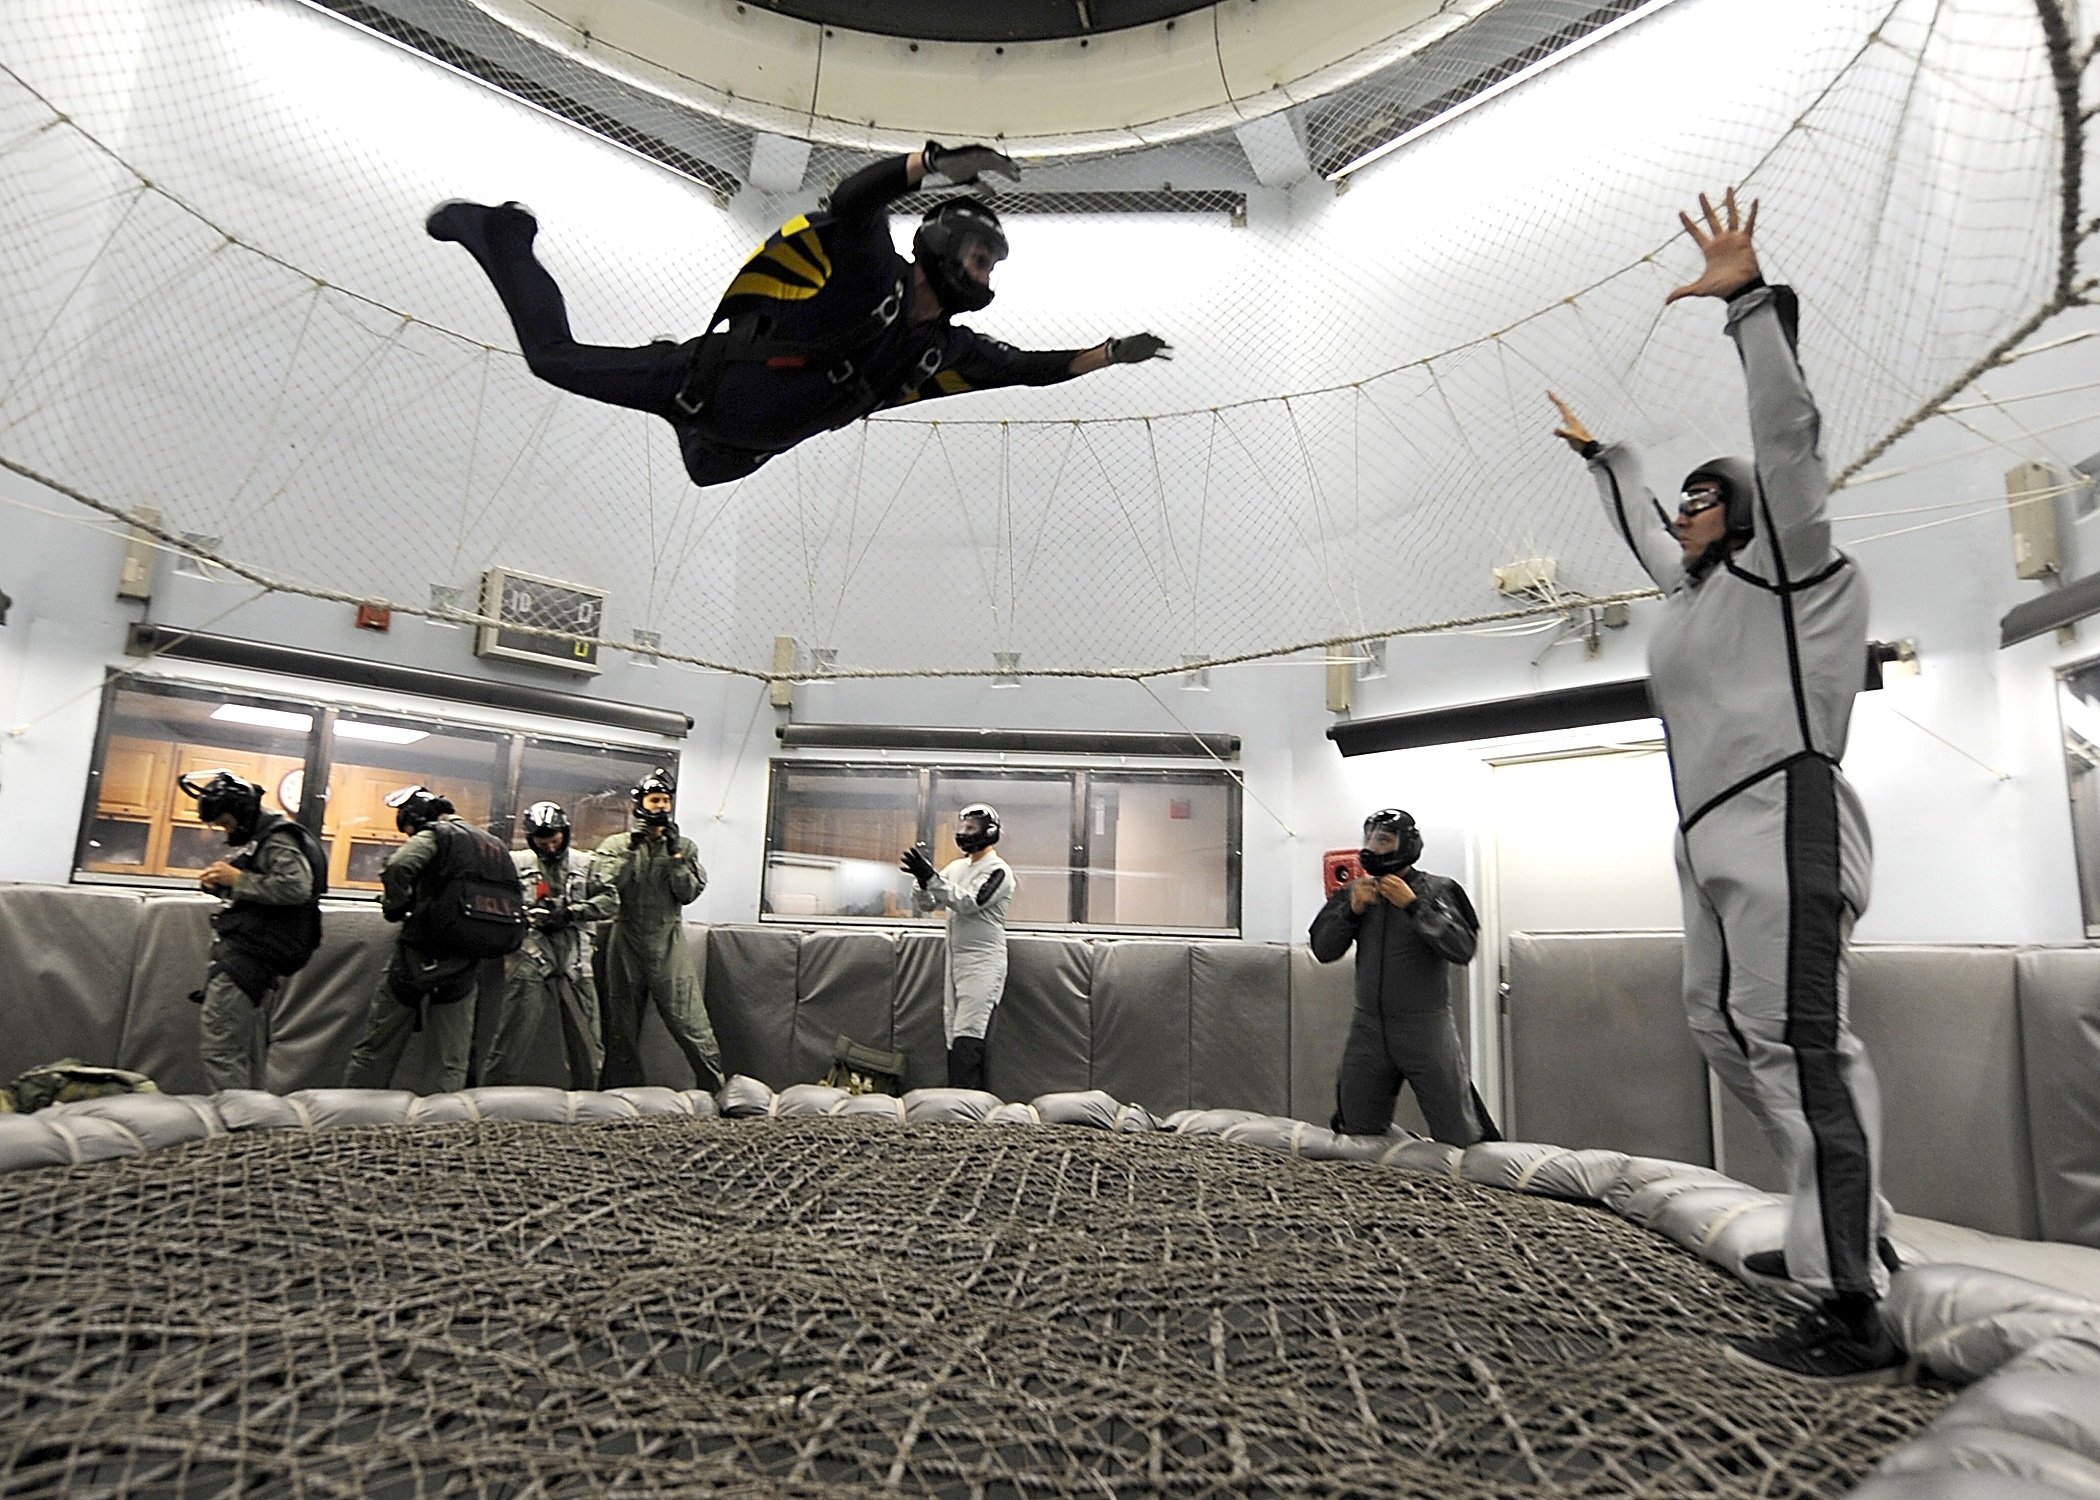 Skydiving simulation photo